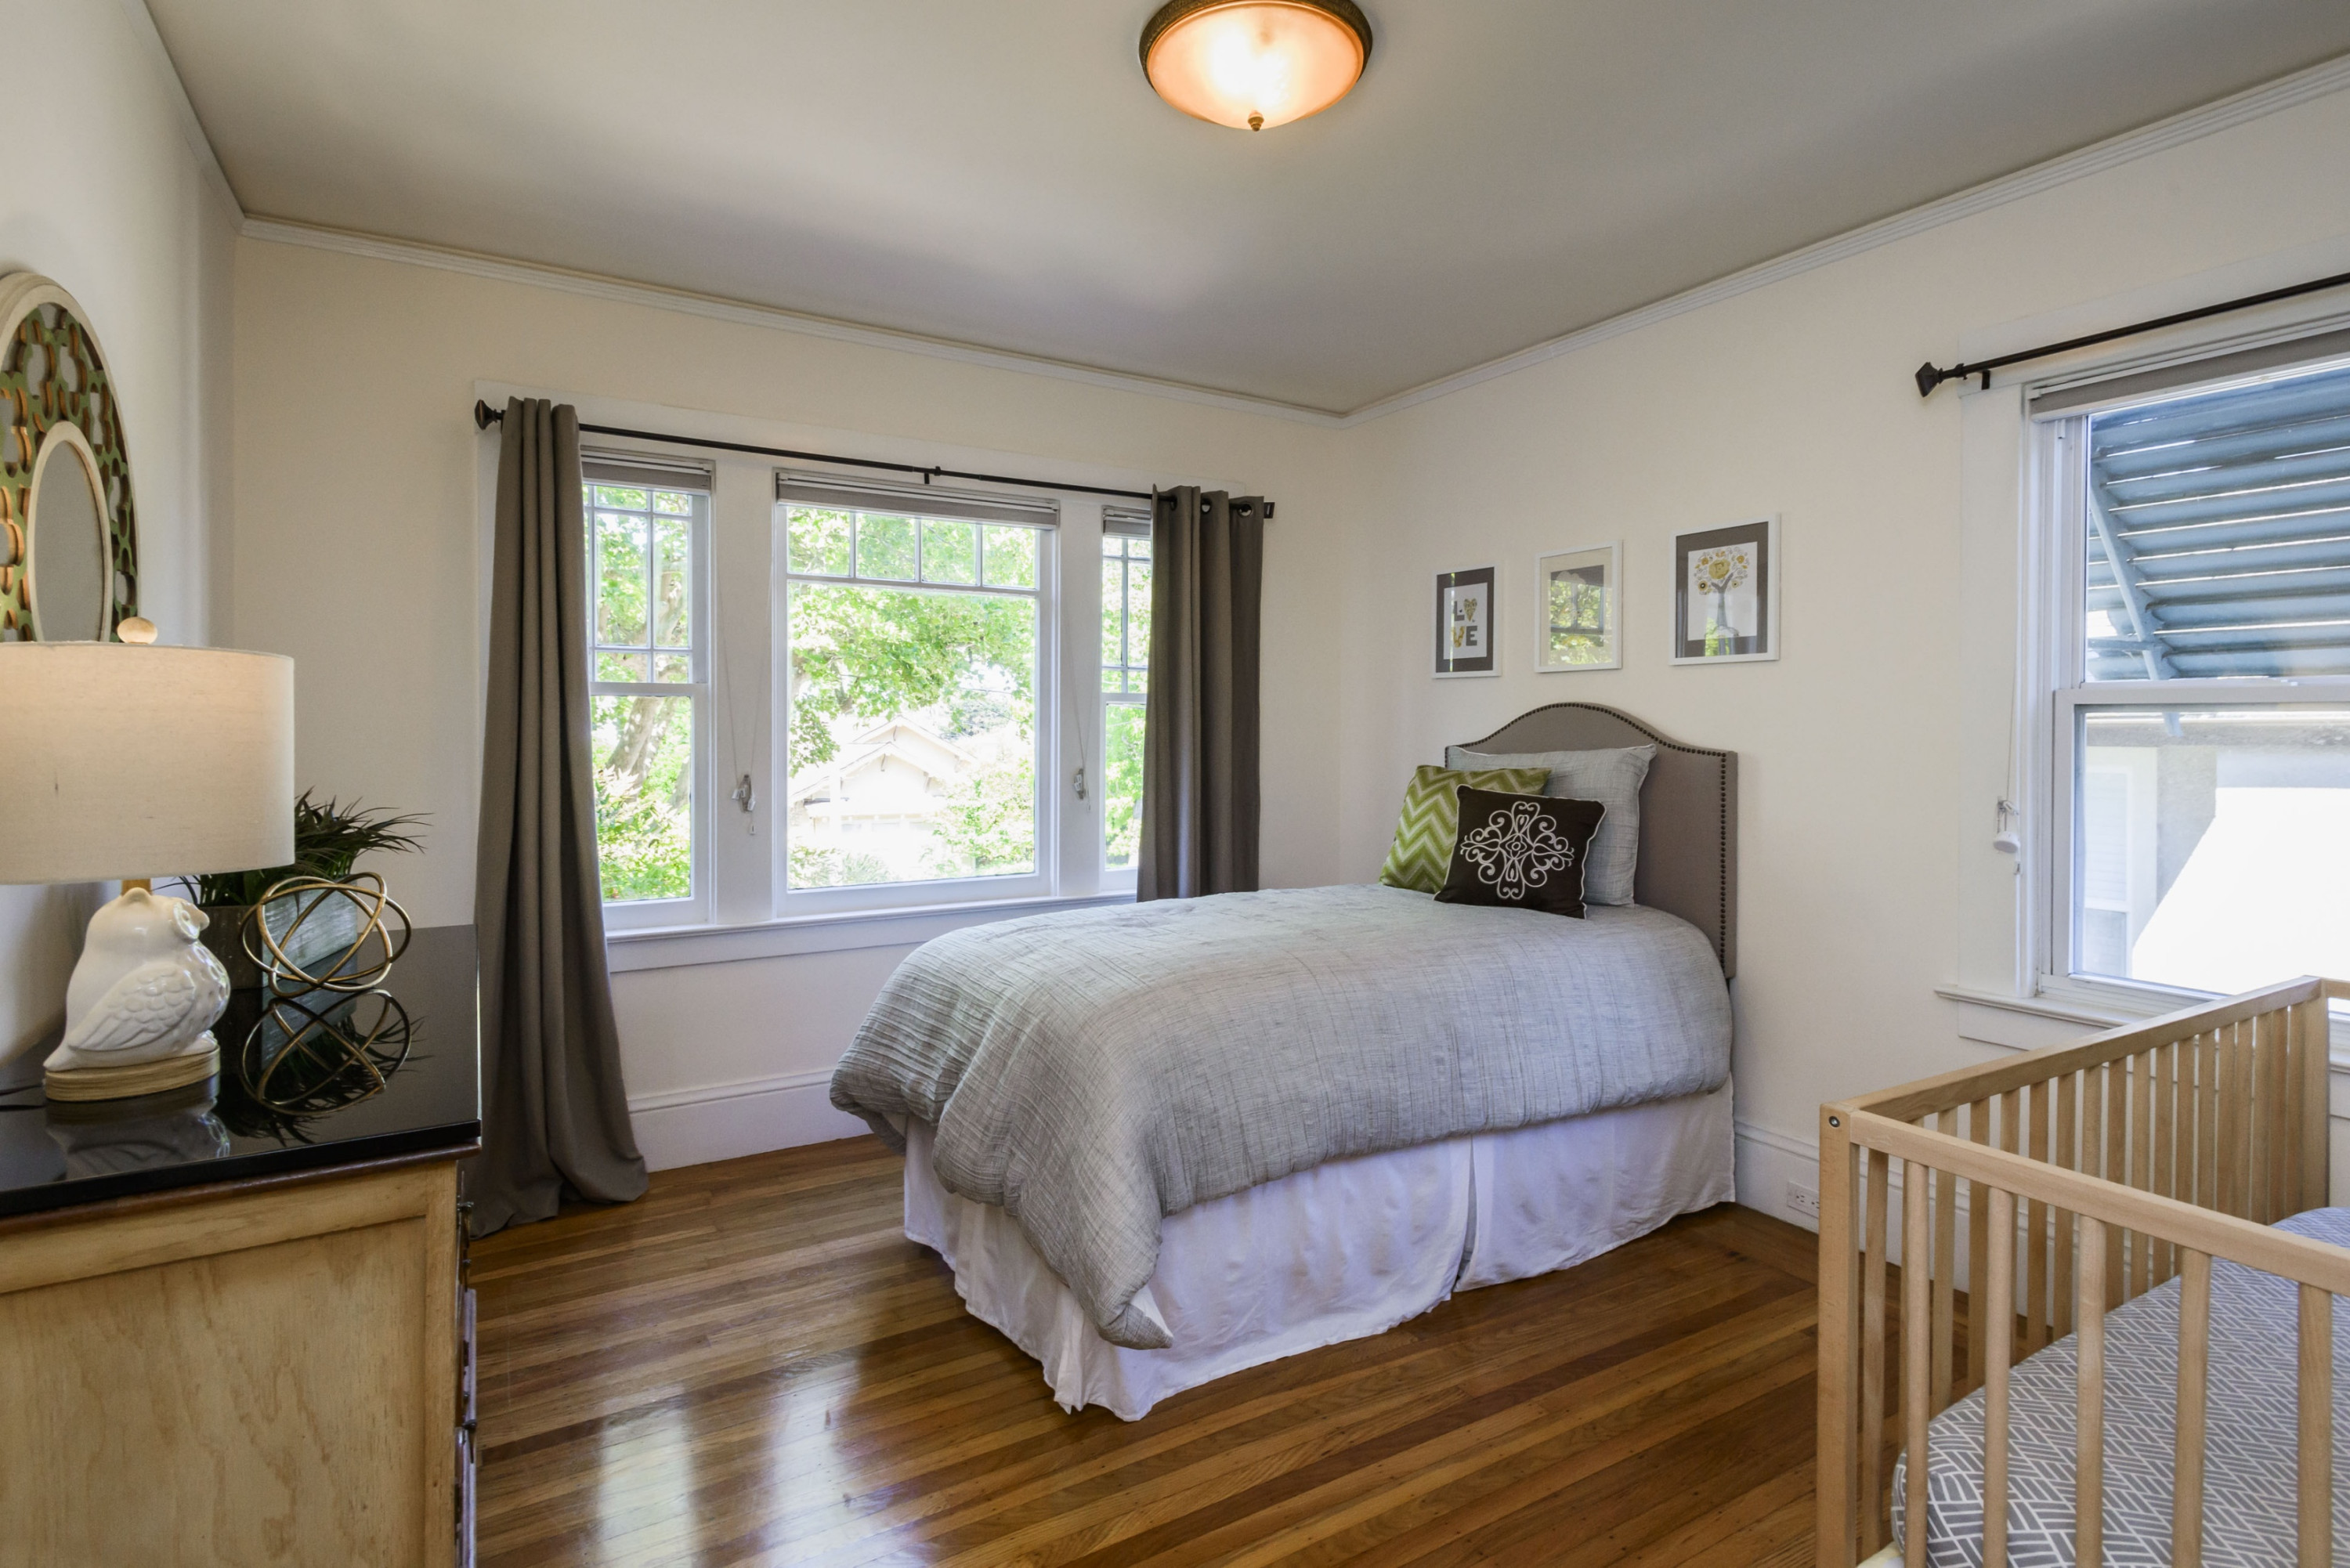 437 Wisnom Avenue Bedroom Crib in Eastern Addition Neighborhood in San Mateo.